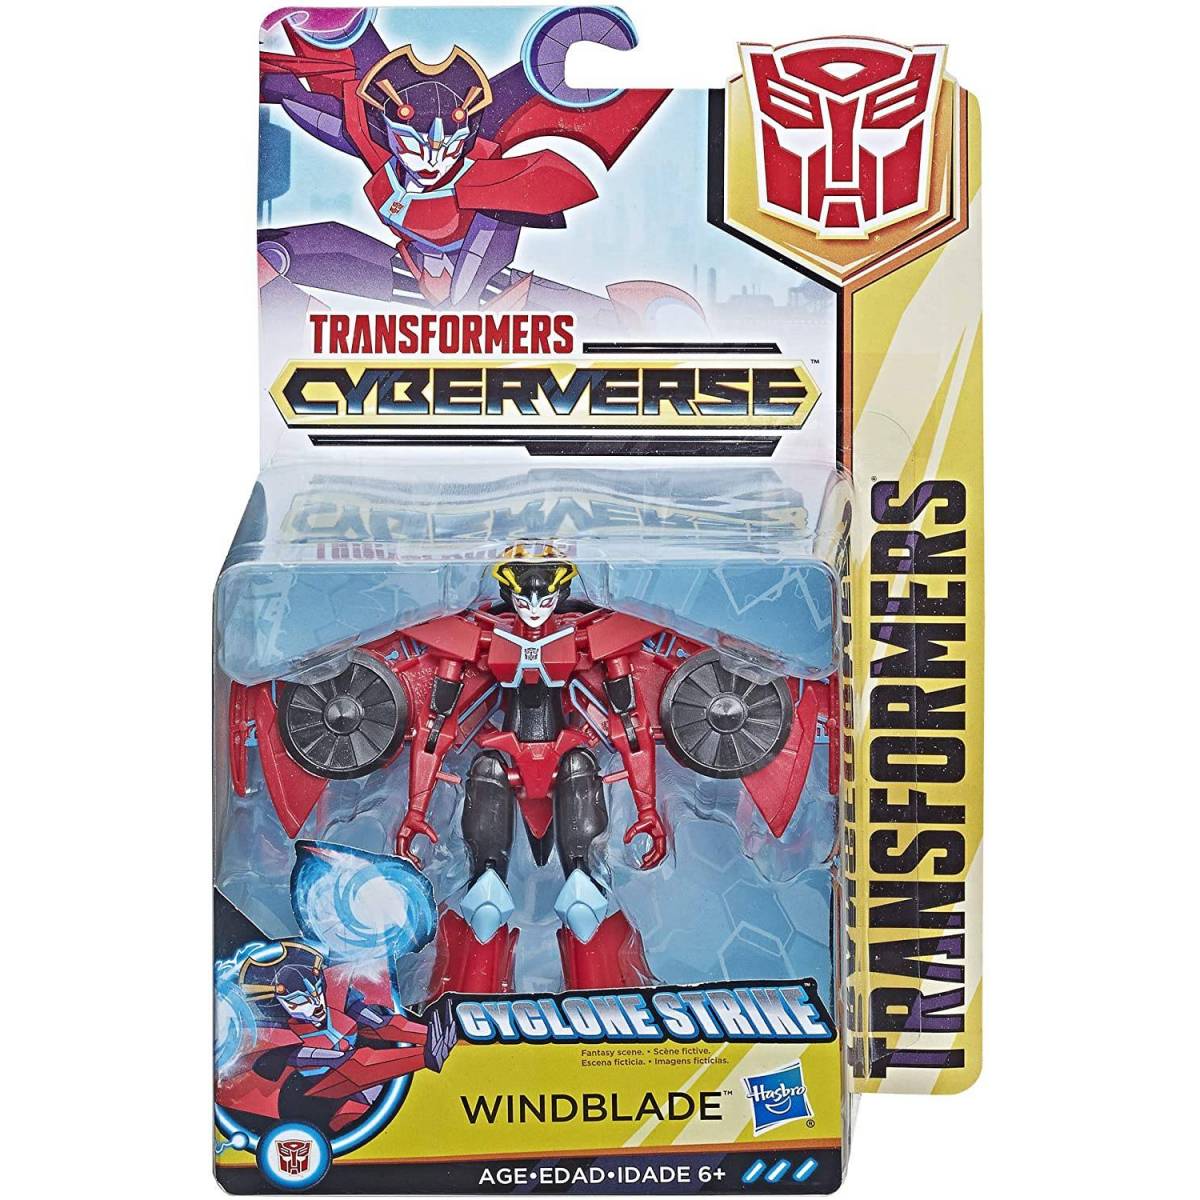 Figurine Transformers Cyberverse Windblade Cyclone Strike